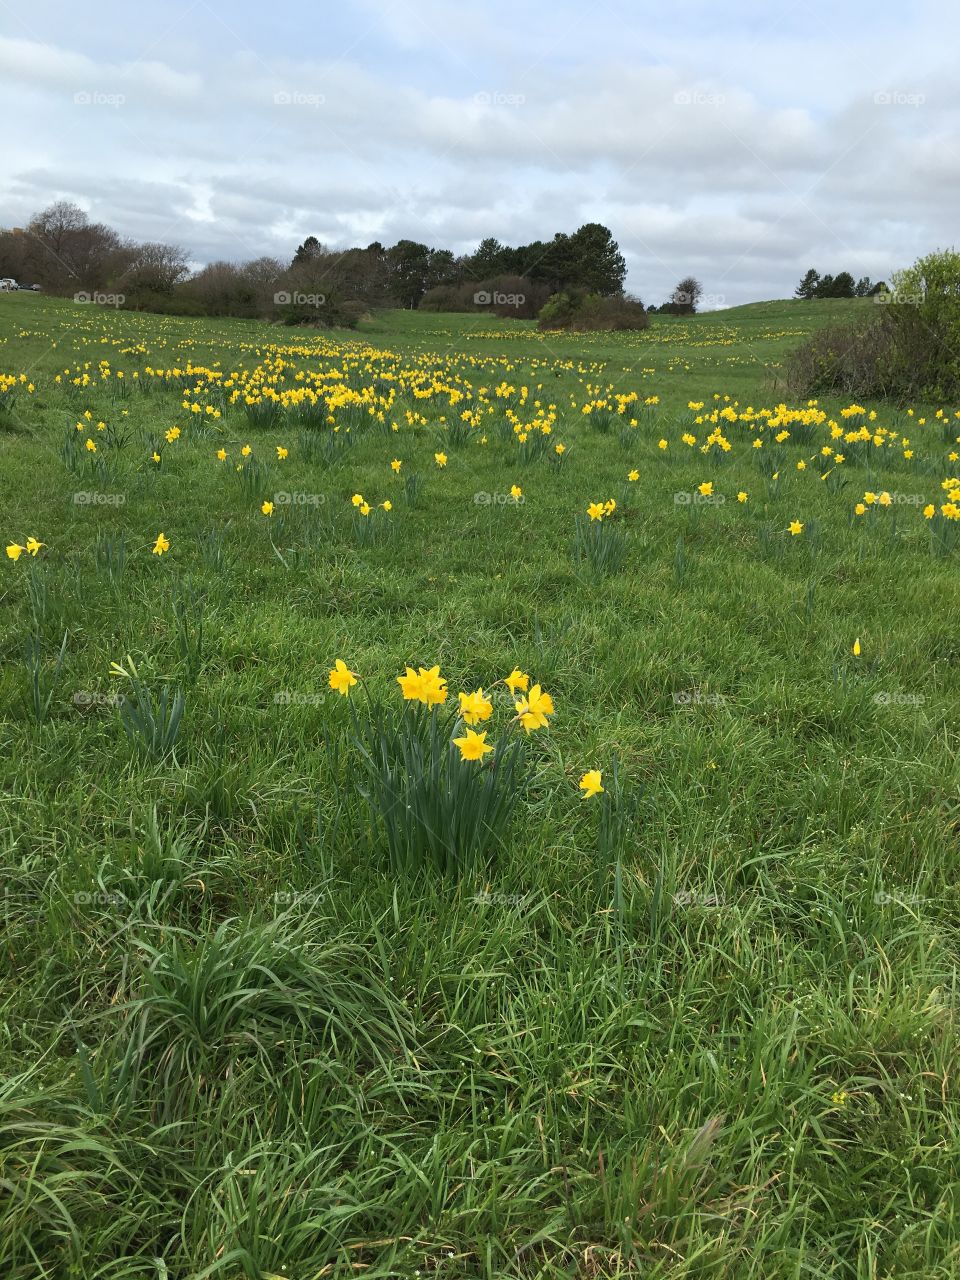 Fields of daffodils